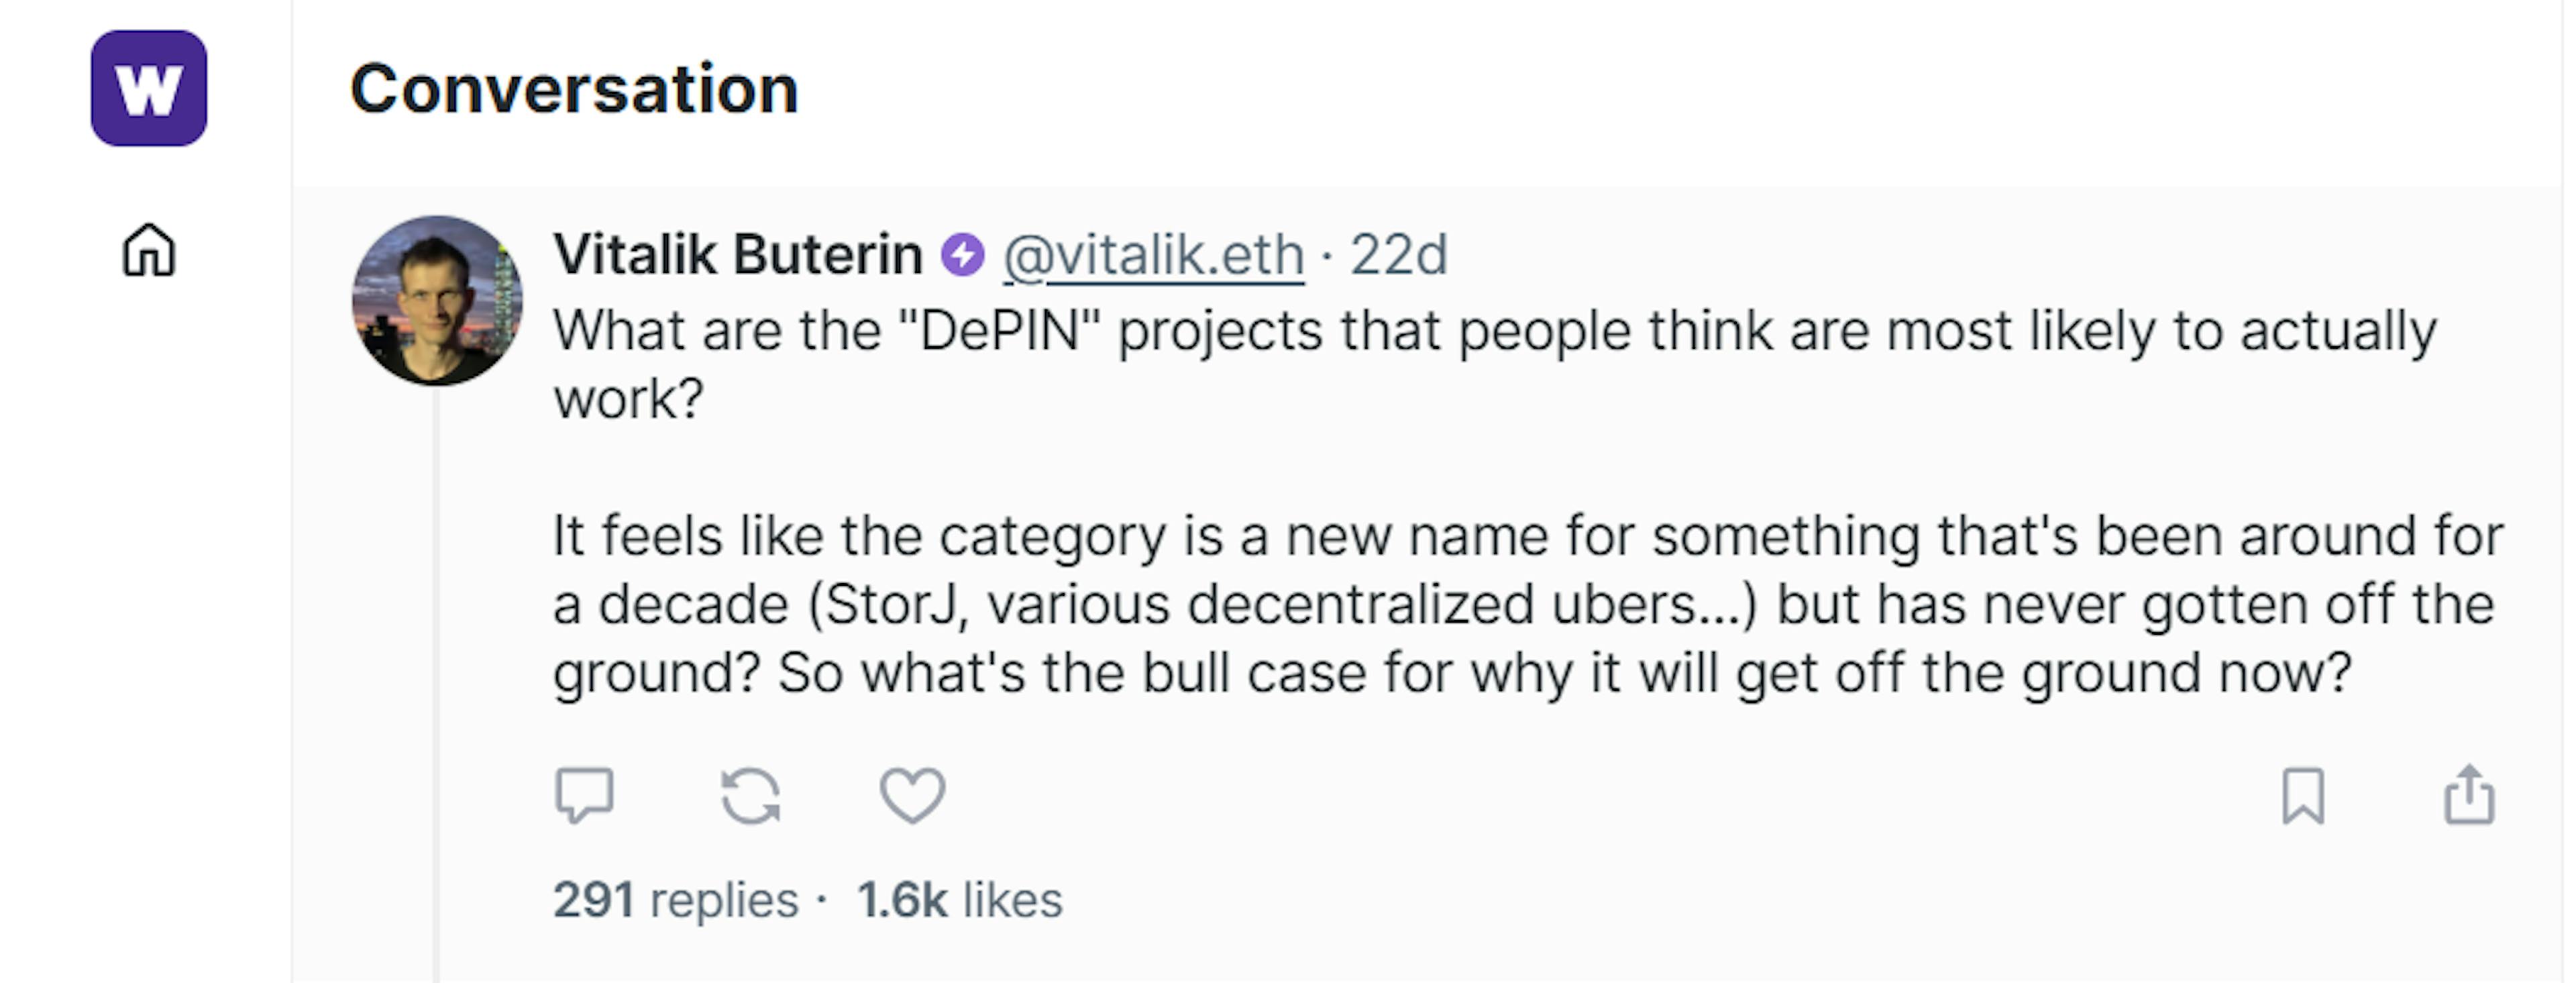 Vitalik Burterin on DePin Projects